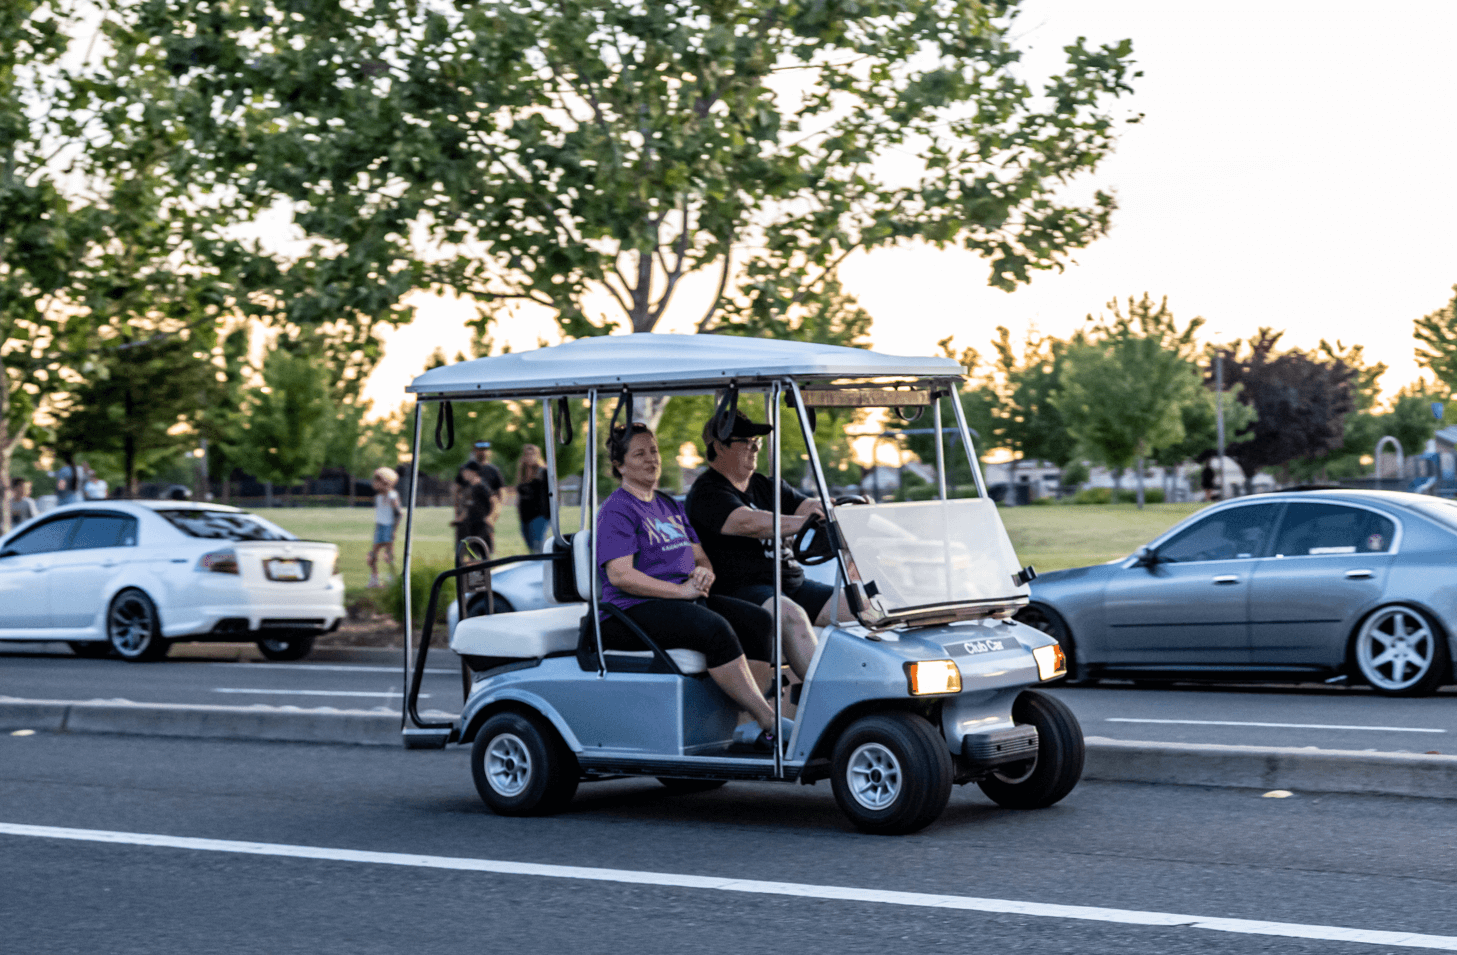 Golf Carts on road